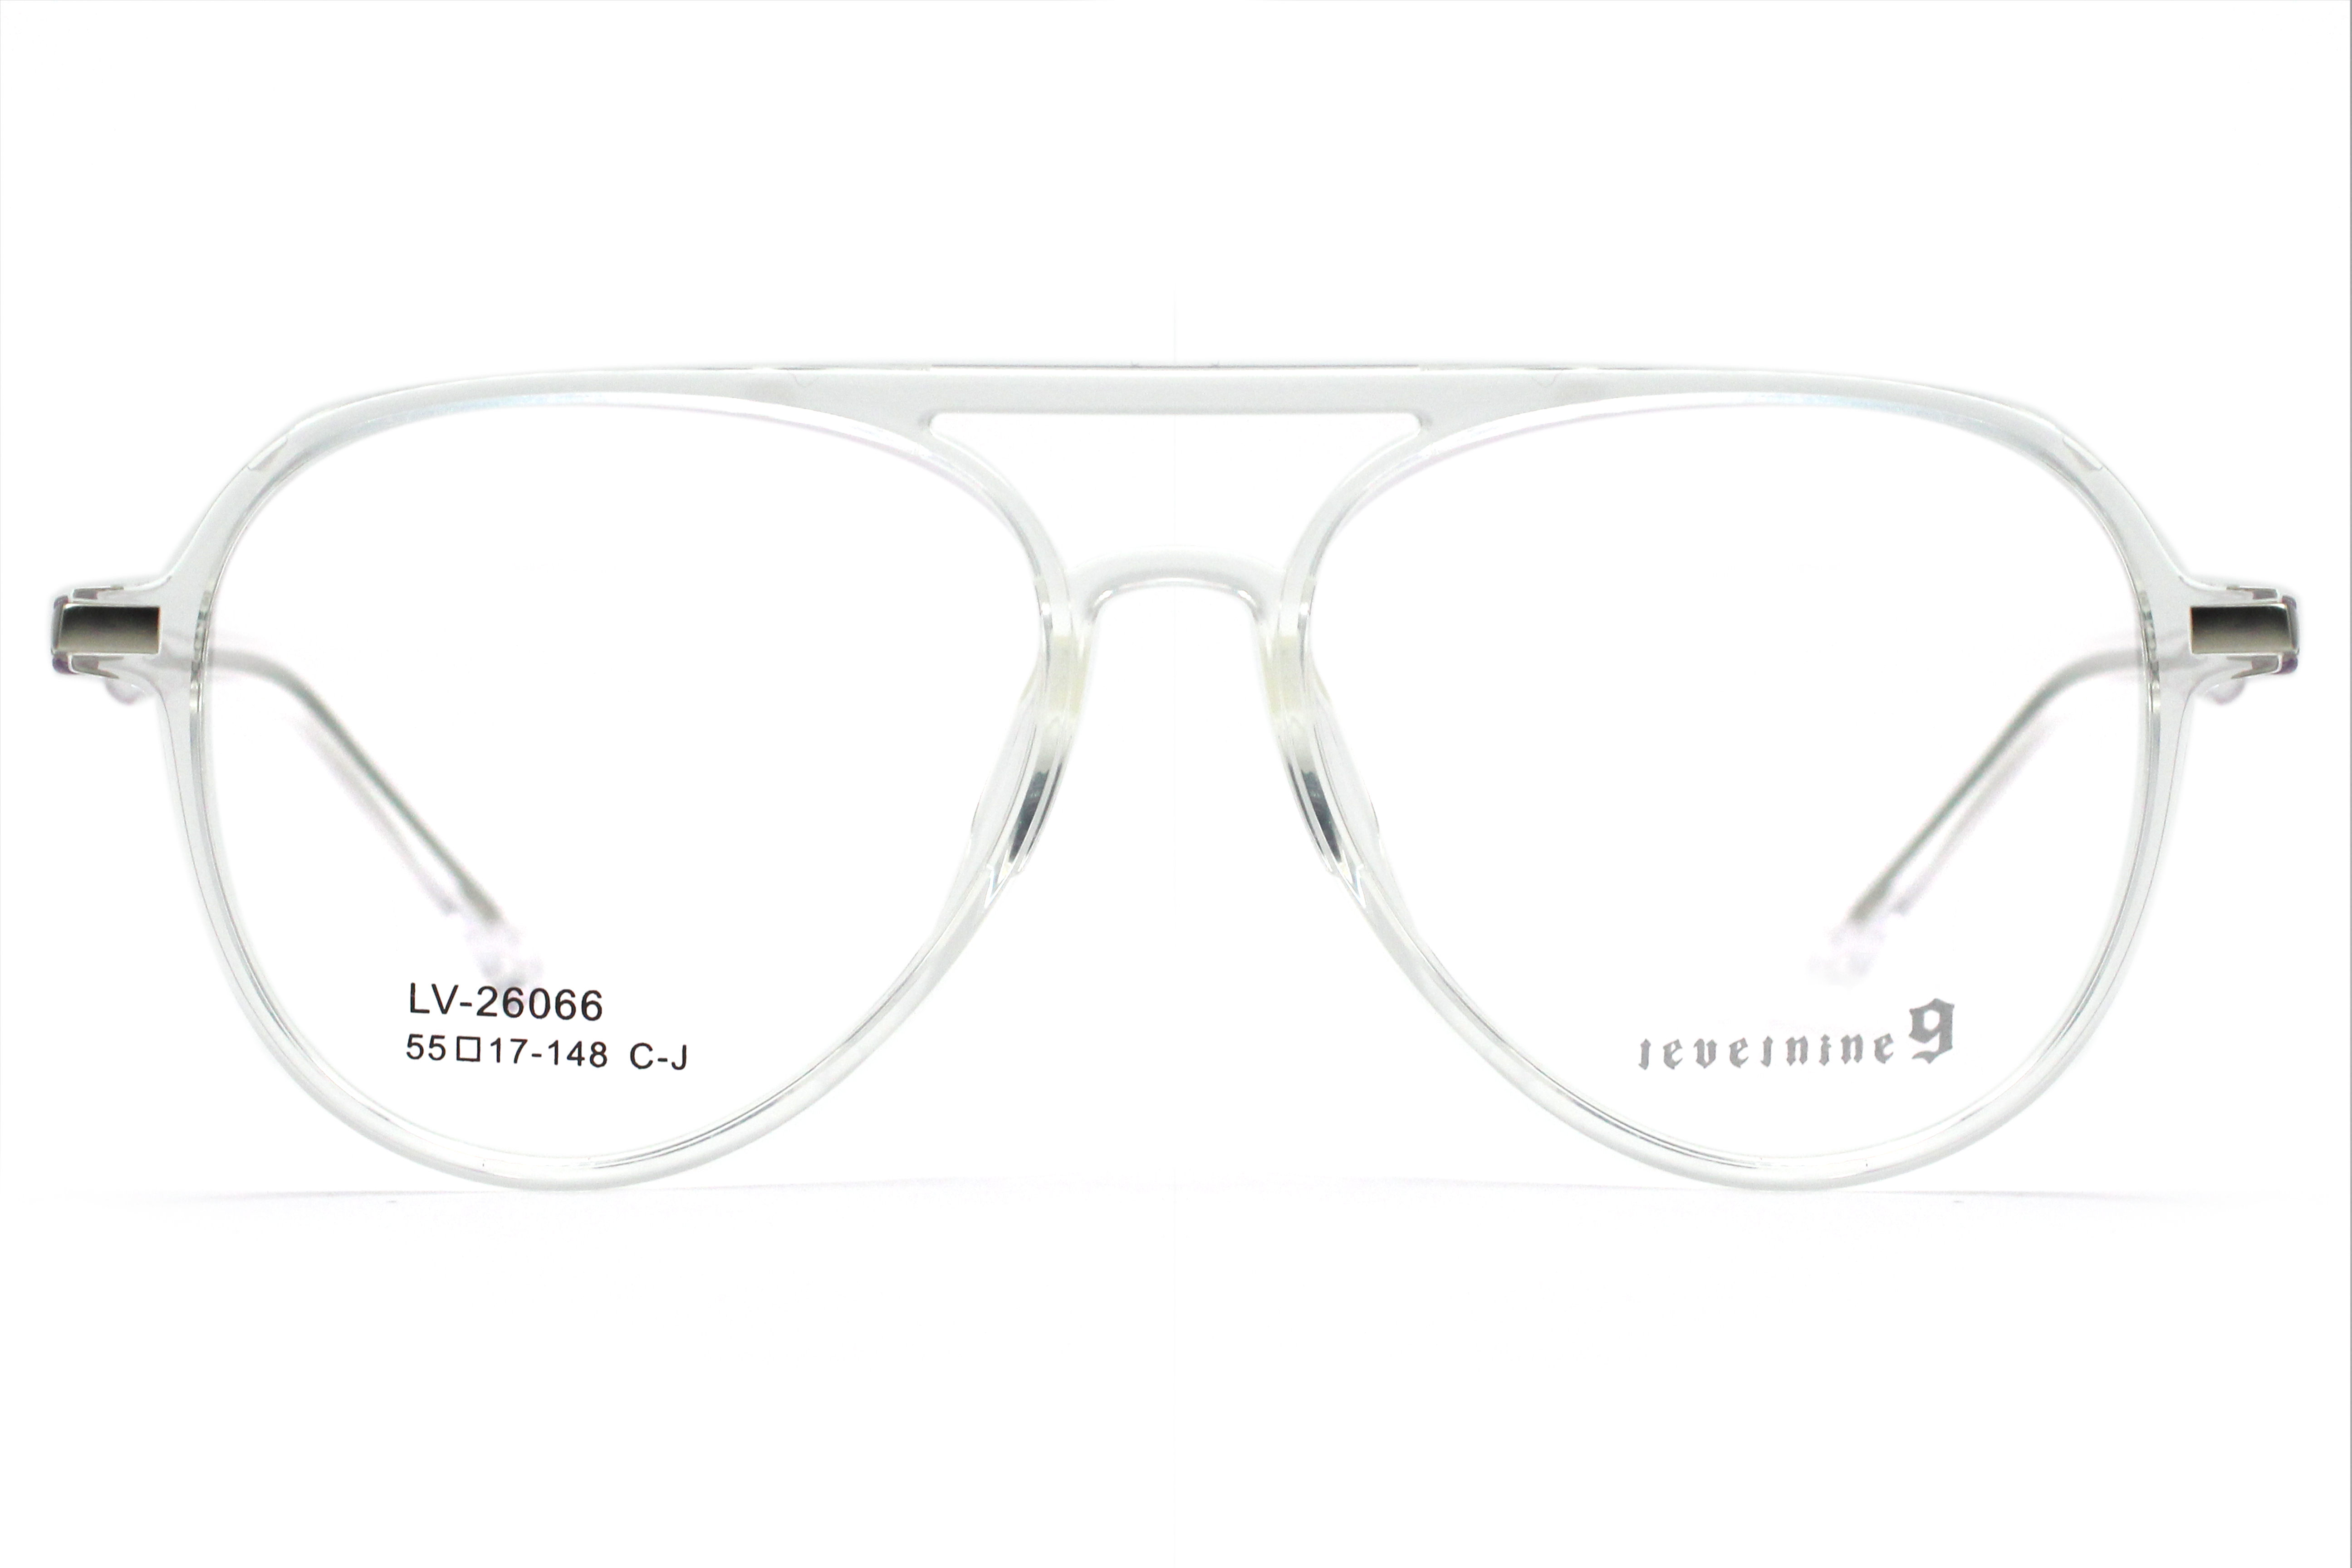 Eyeglasses Frames TR90